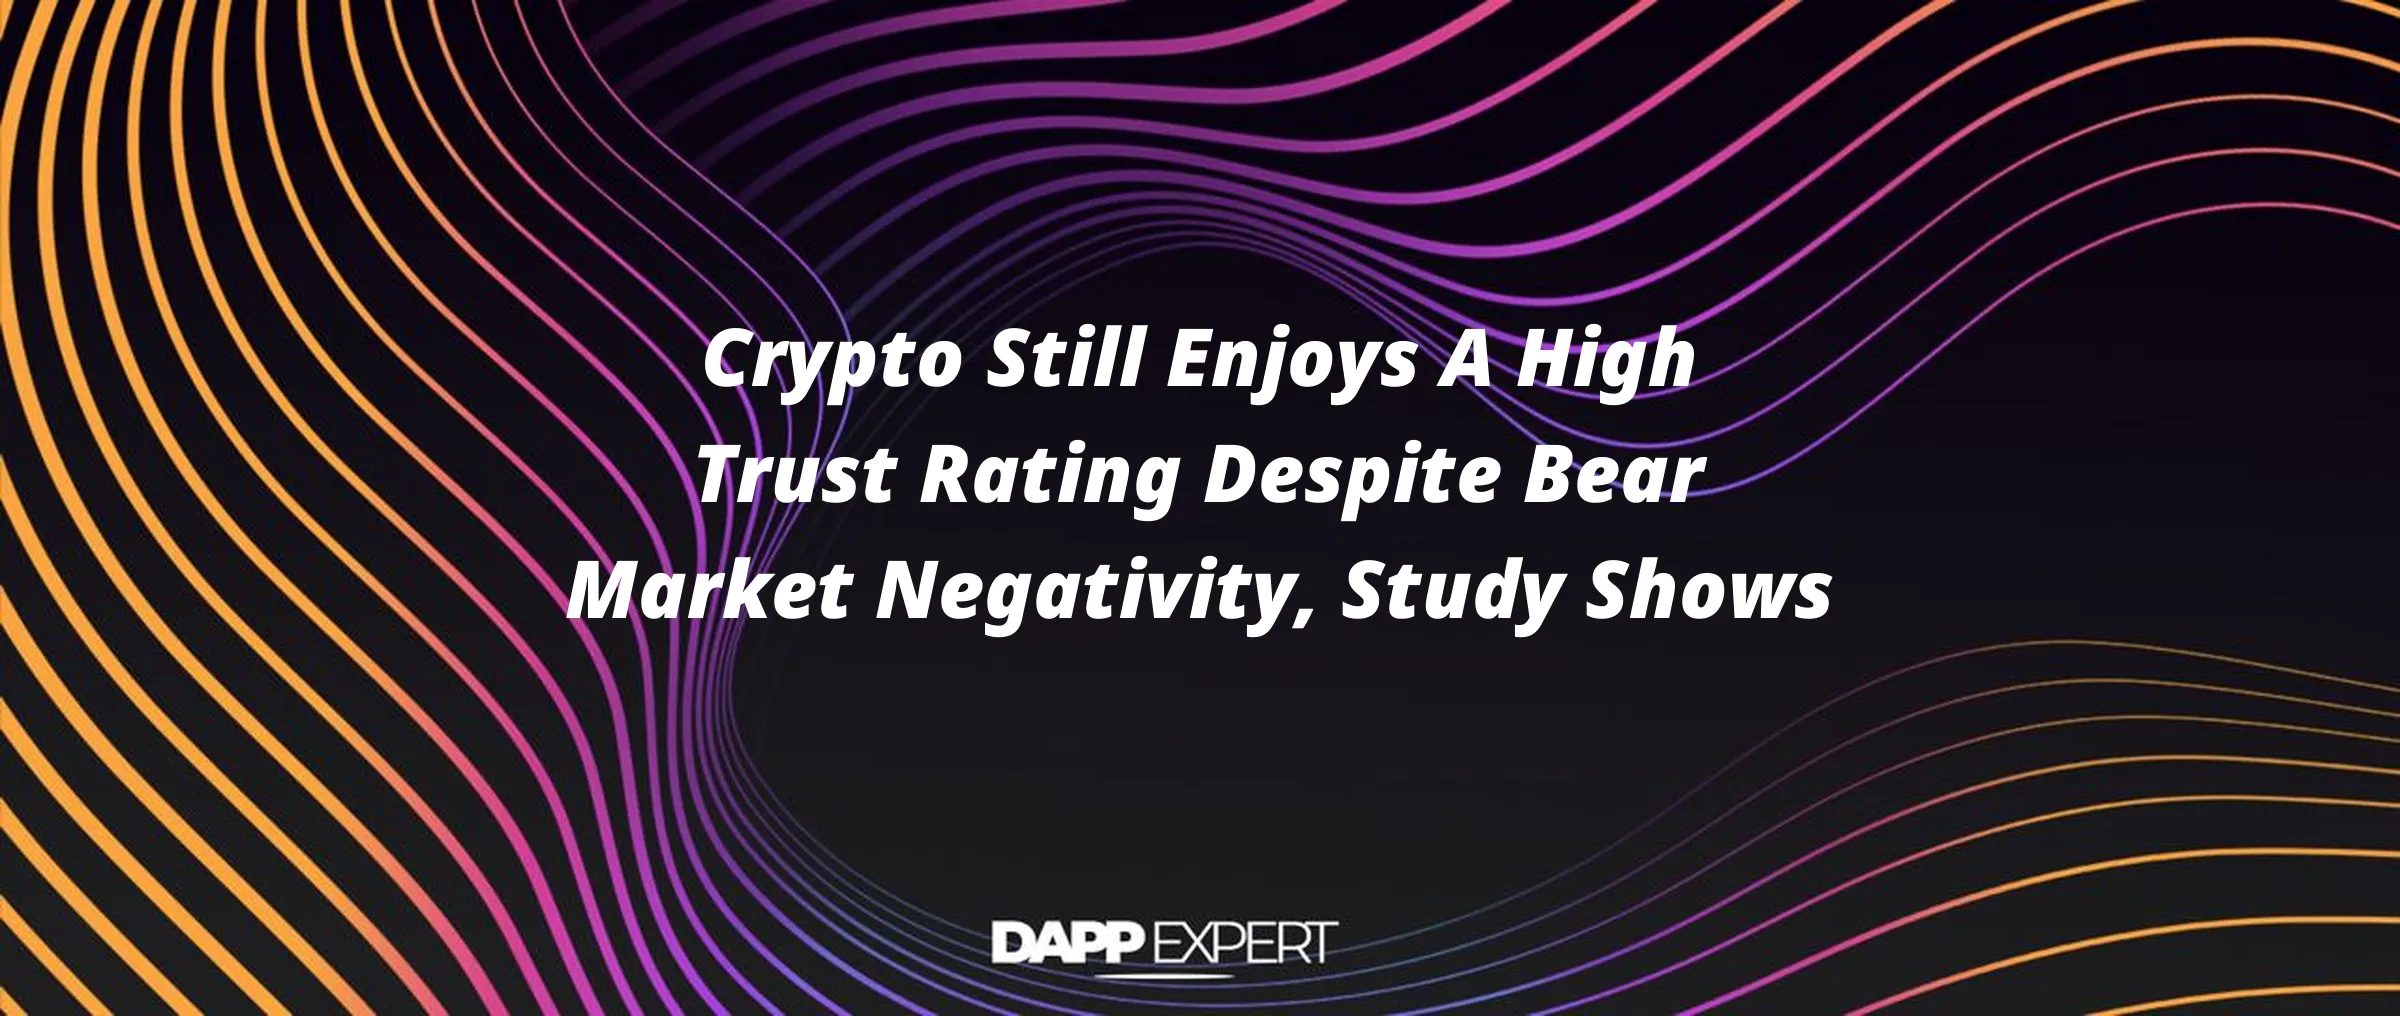 Crypto Still Enjoys A High Trust Rating Despite Bear Market Negativity, Study Shows